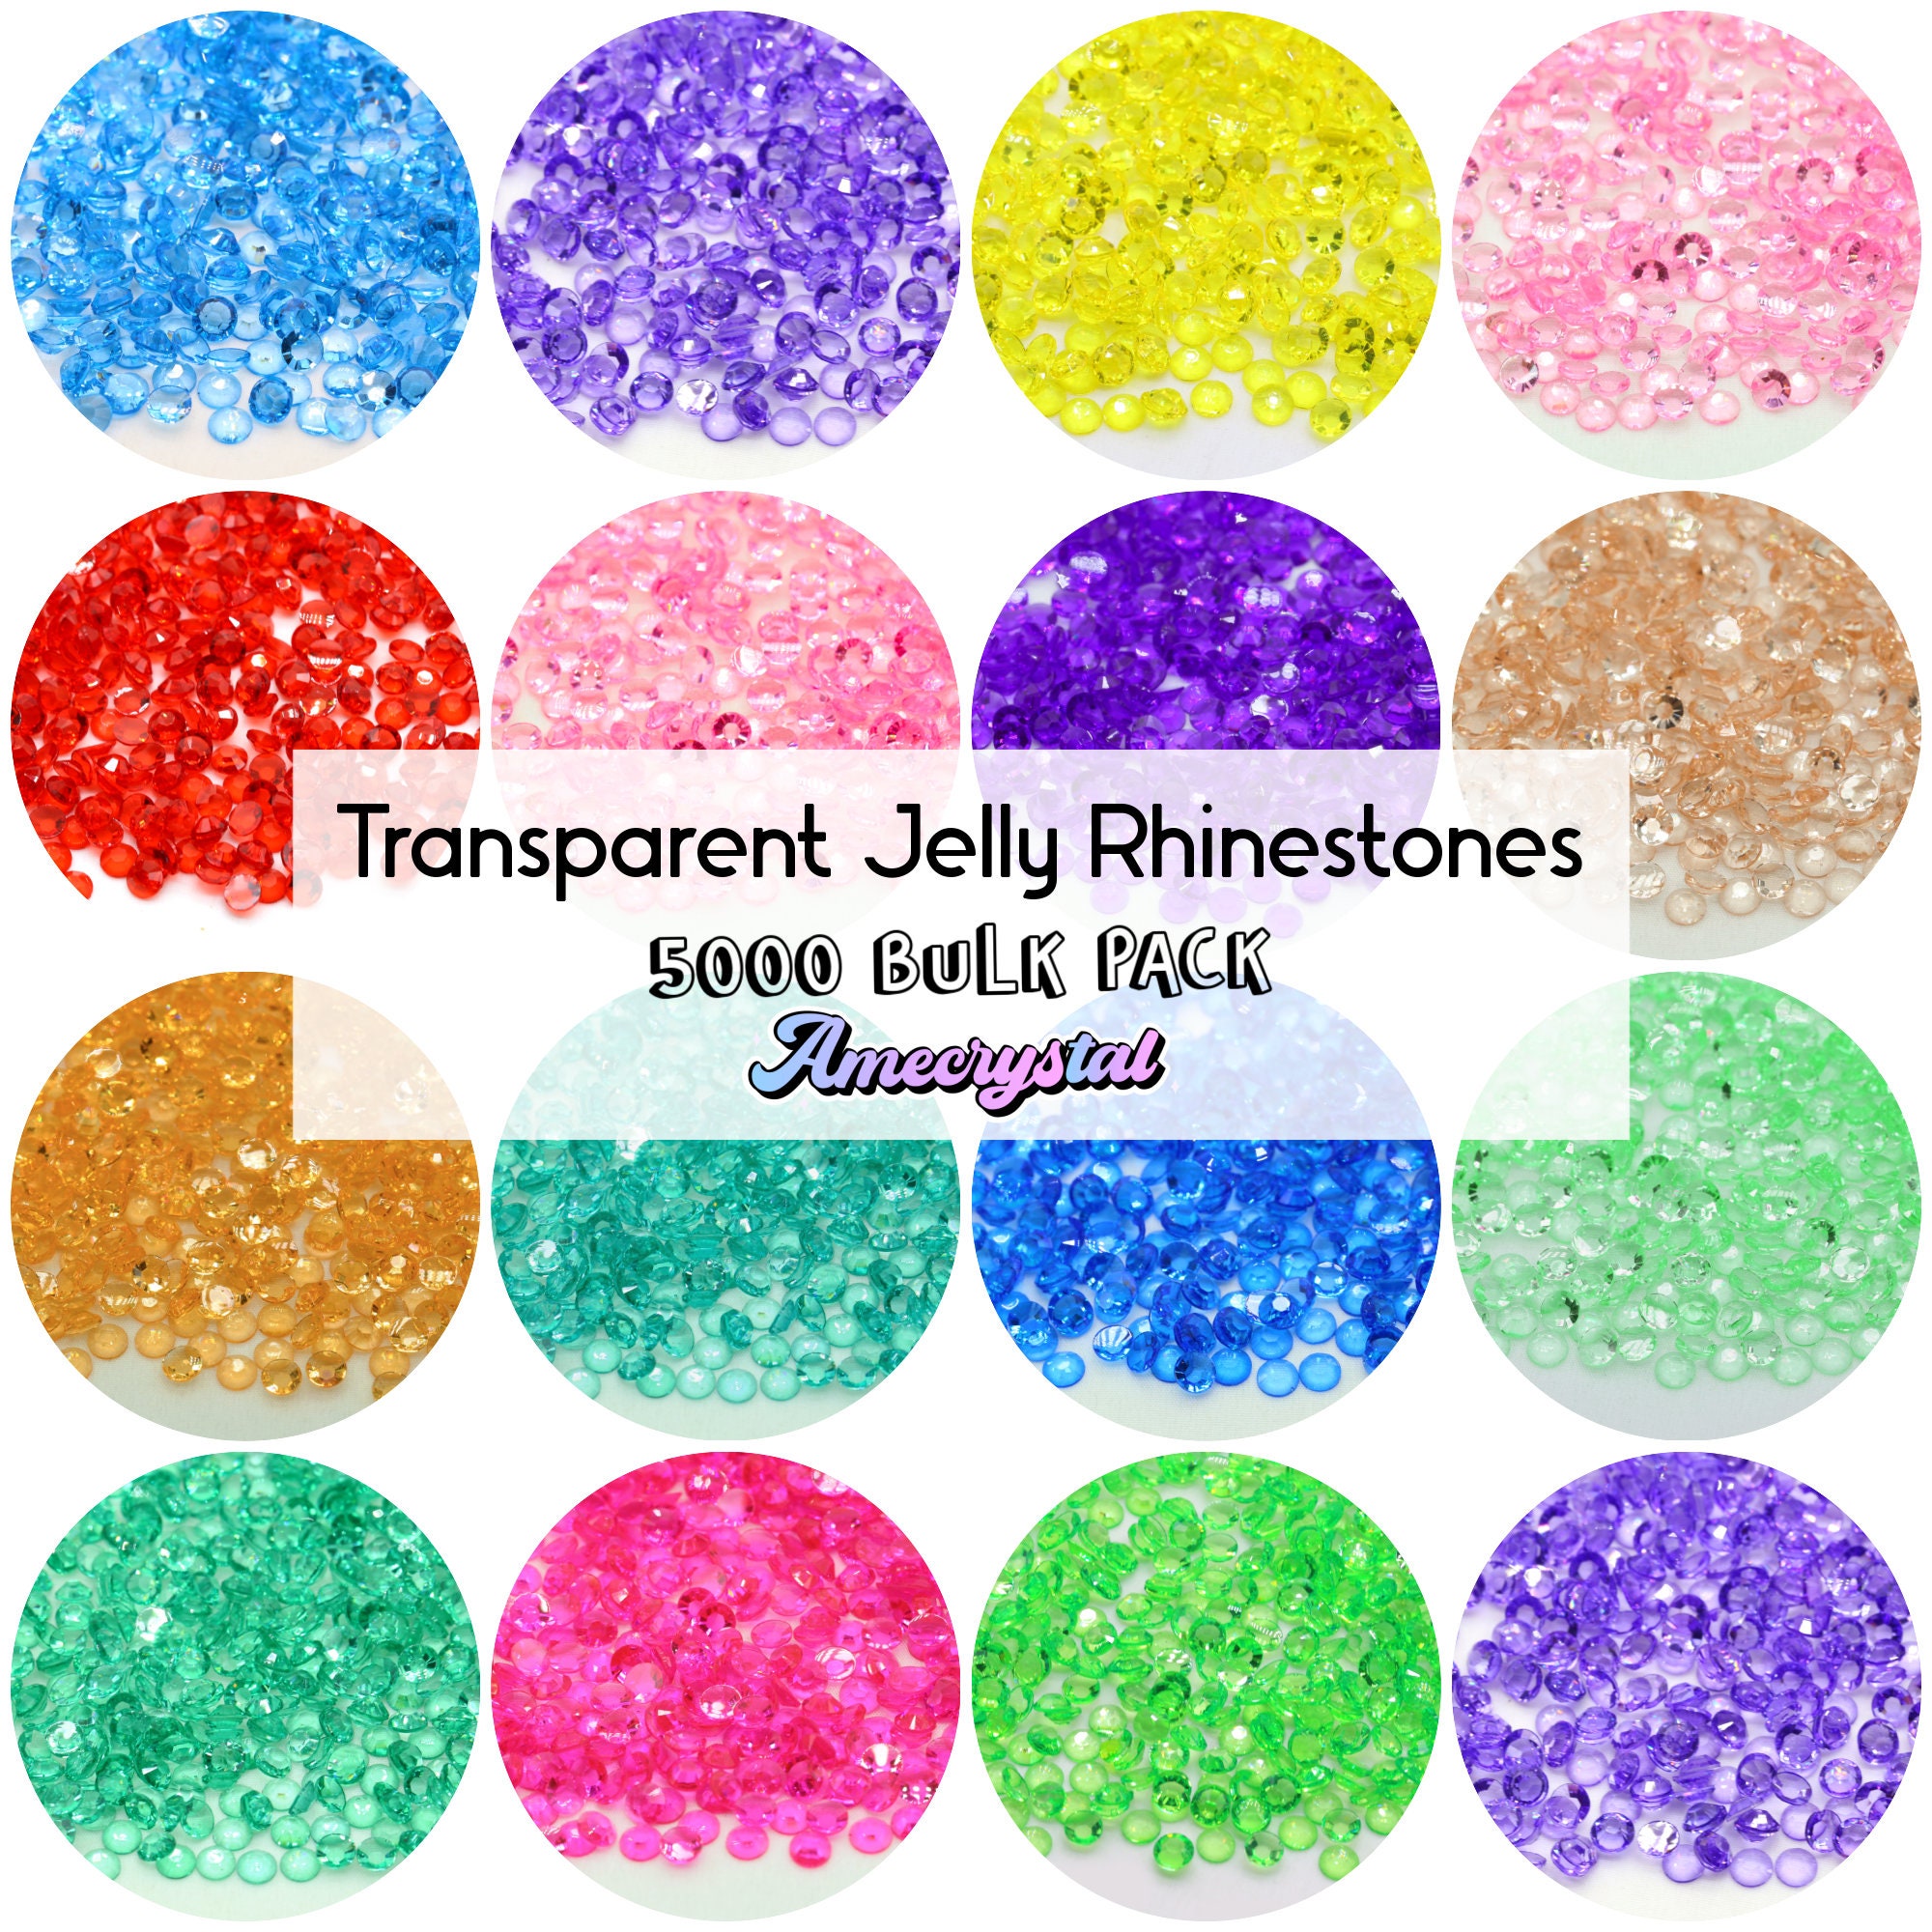 BULK Transparent Jelly Rhinestones 5000 Pcs/3000 Pcs, Resin Rhinestones,  Bulk Rhinestones in 4mm and 5mm Bulk Bags 